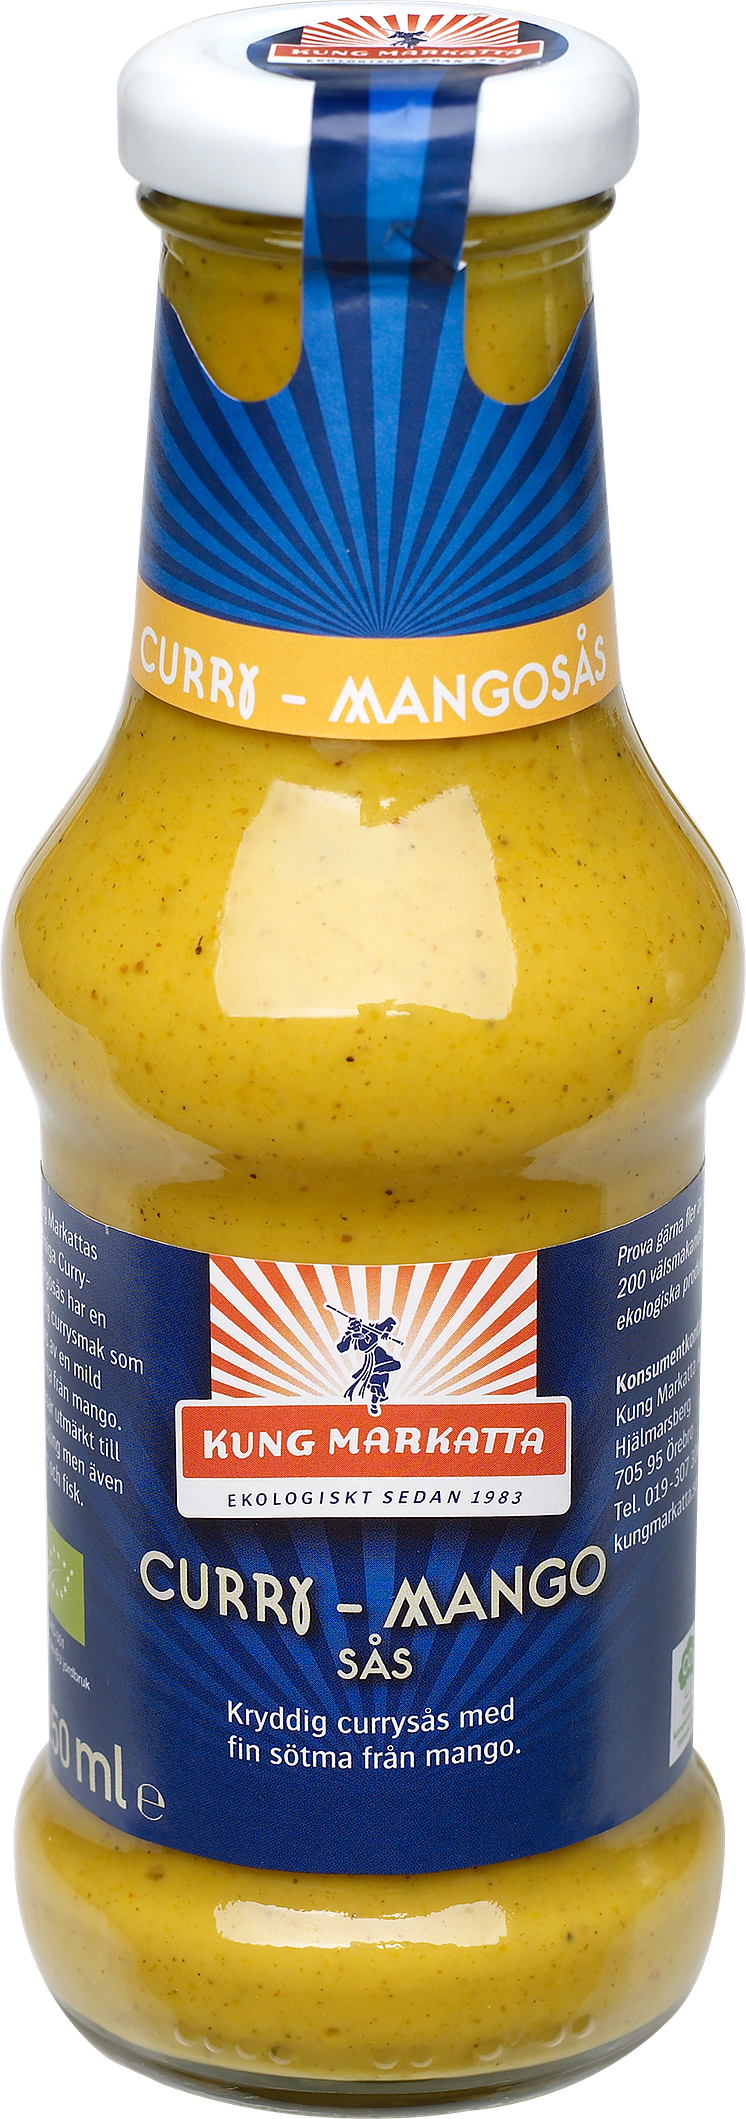 Kung Markatta Curry-Mangosås